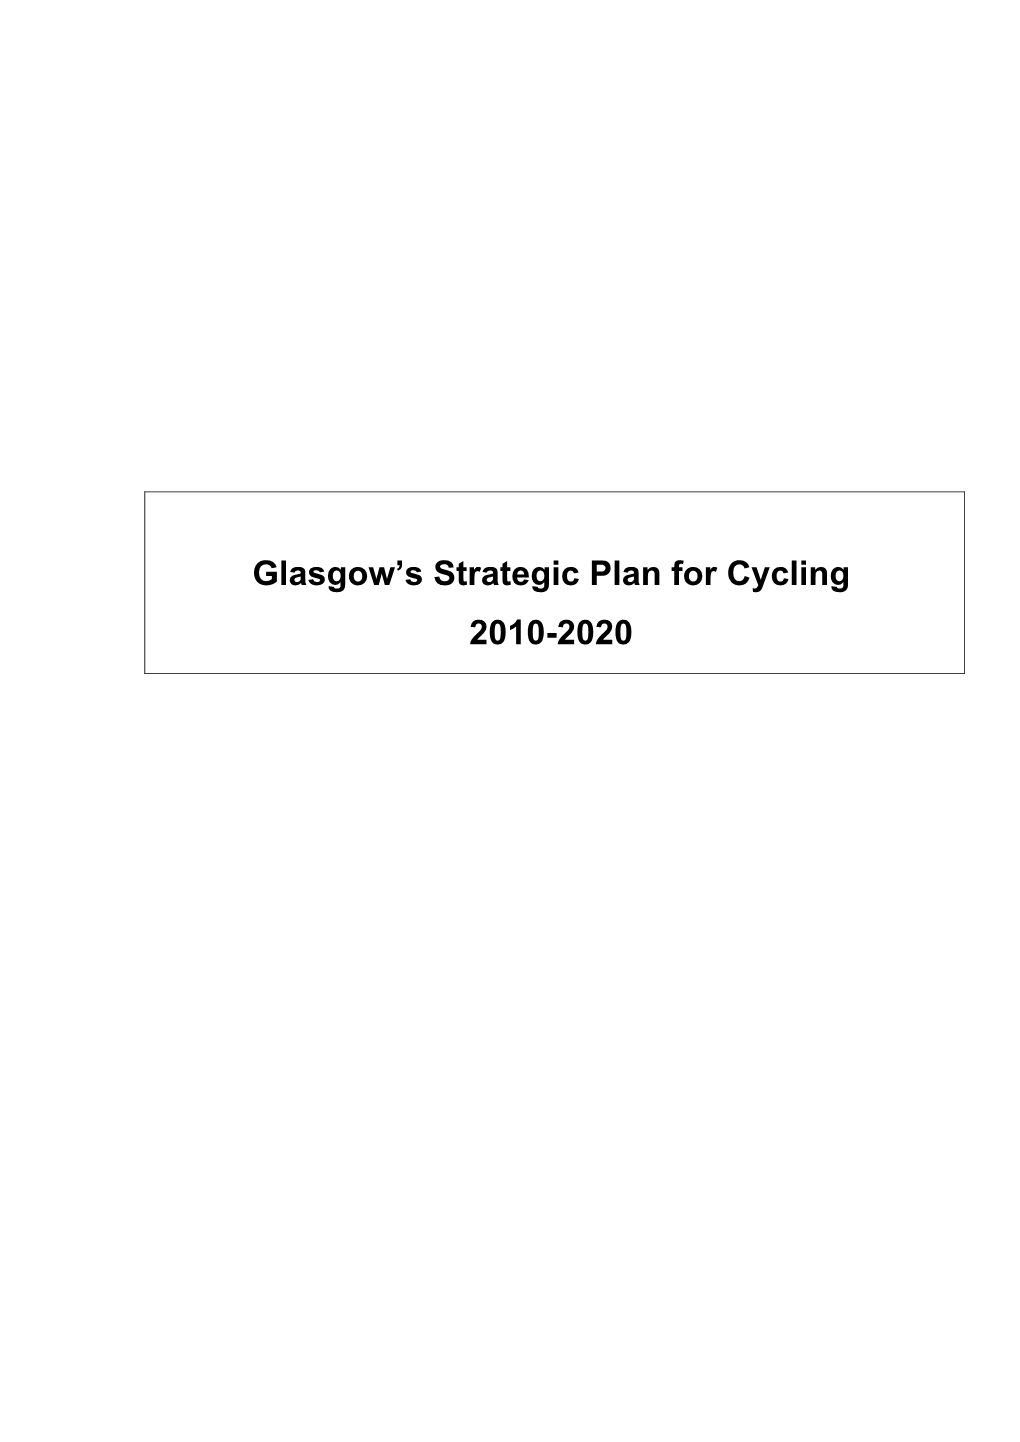 Glasgow's Strategic Plan for Cycling 2010-2020